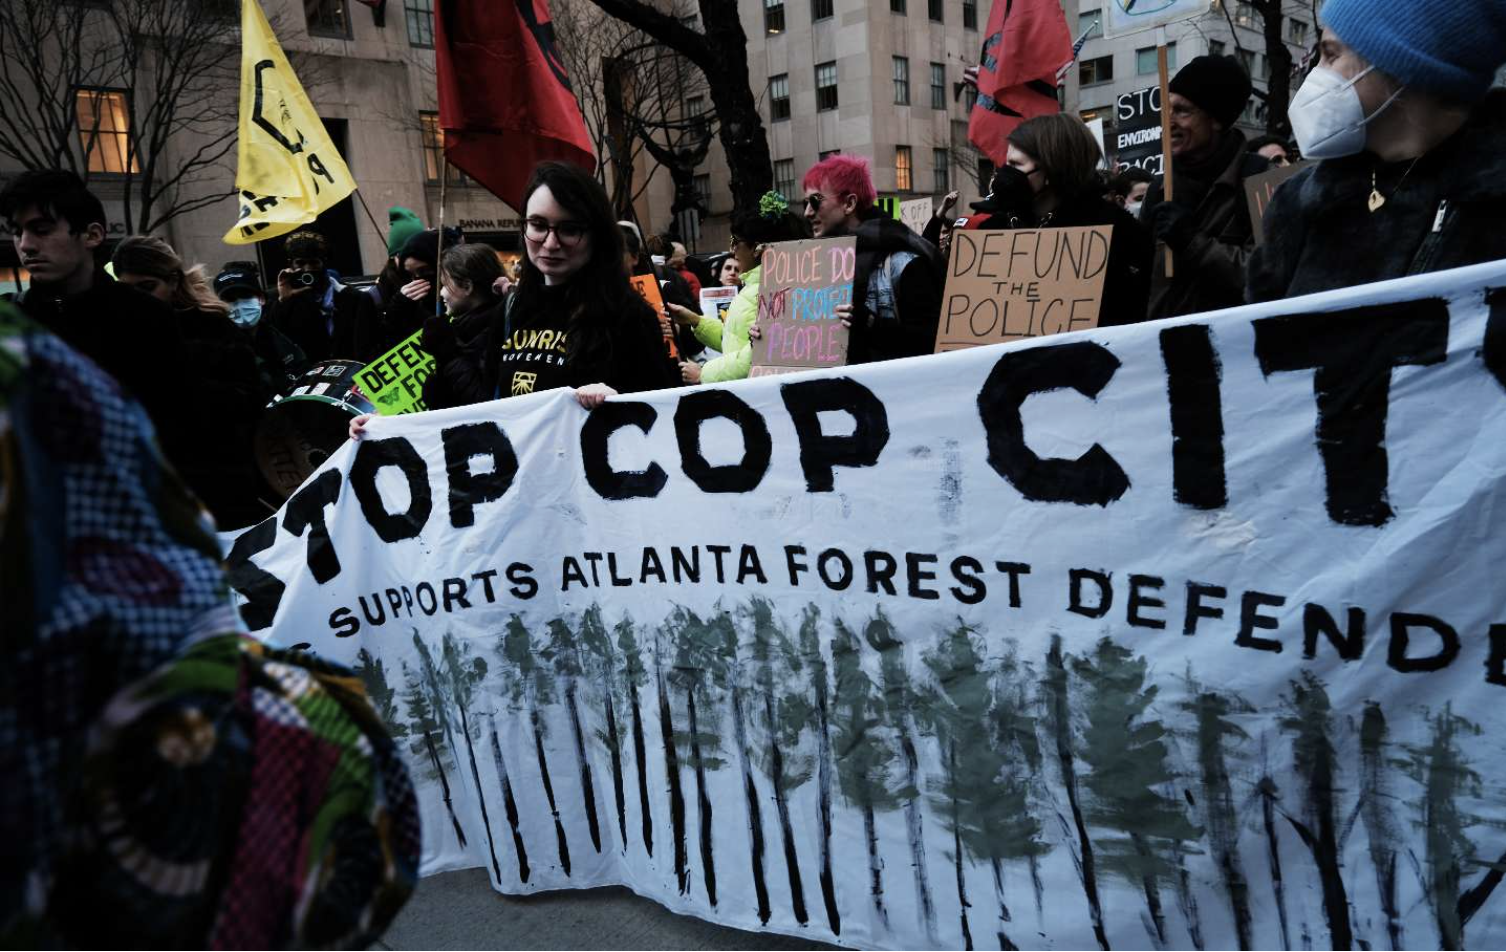 Will Atlanta’s “Stop Cop City” Referendum Make It Onto the Ballot?